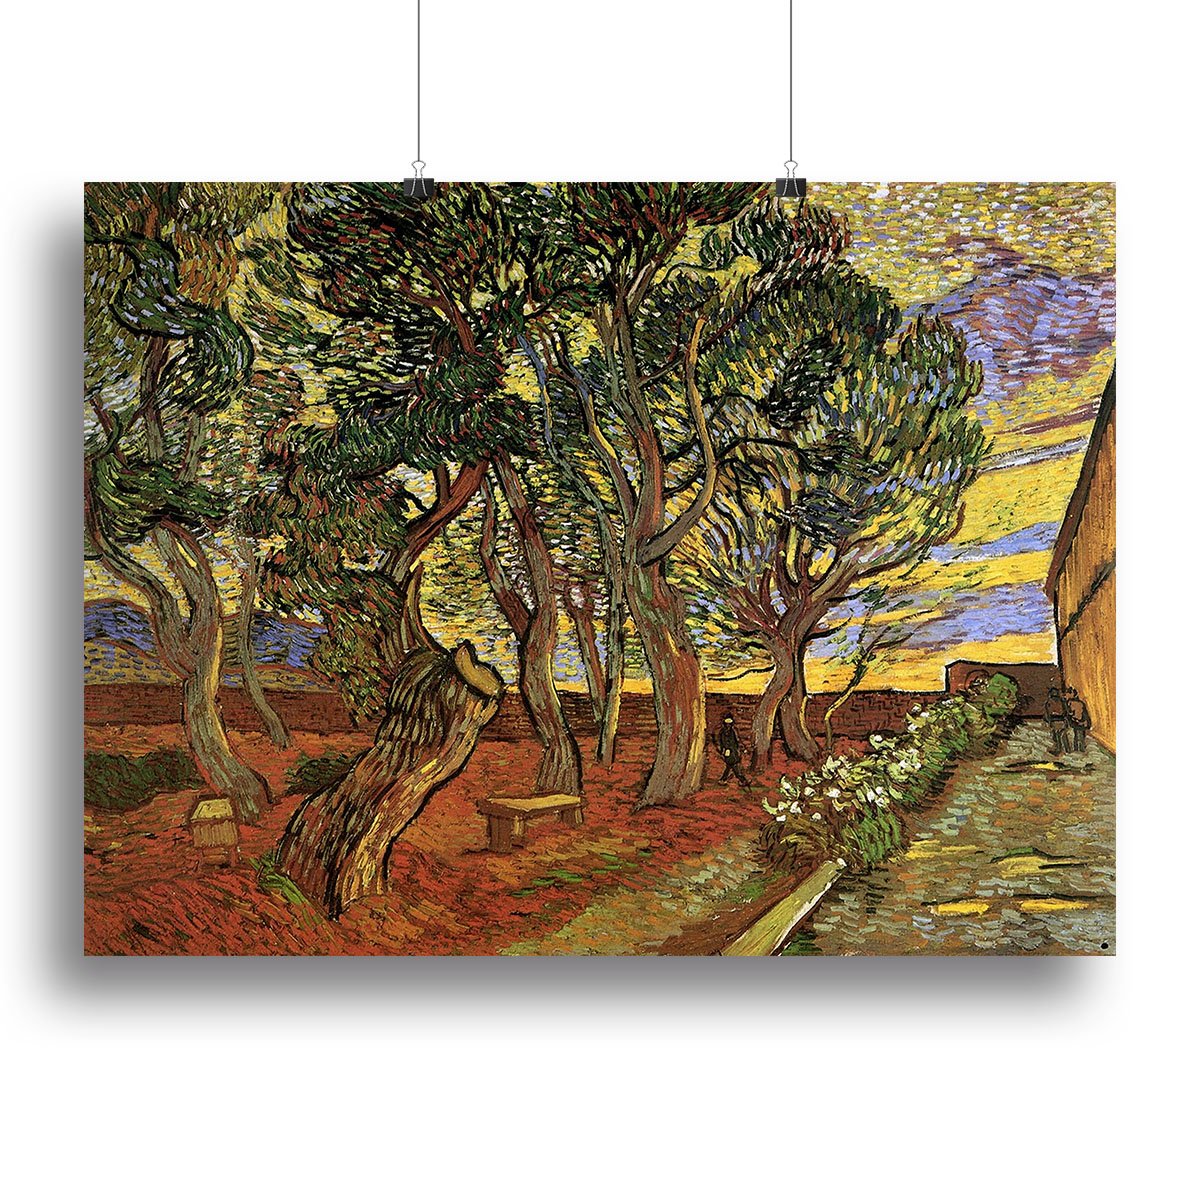 The Garden of Saint-Paul Hospital 4 by Van Gogh Canvas Print or Poster